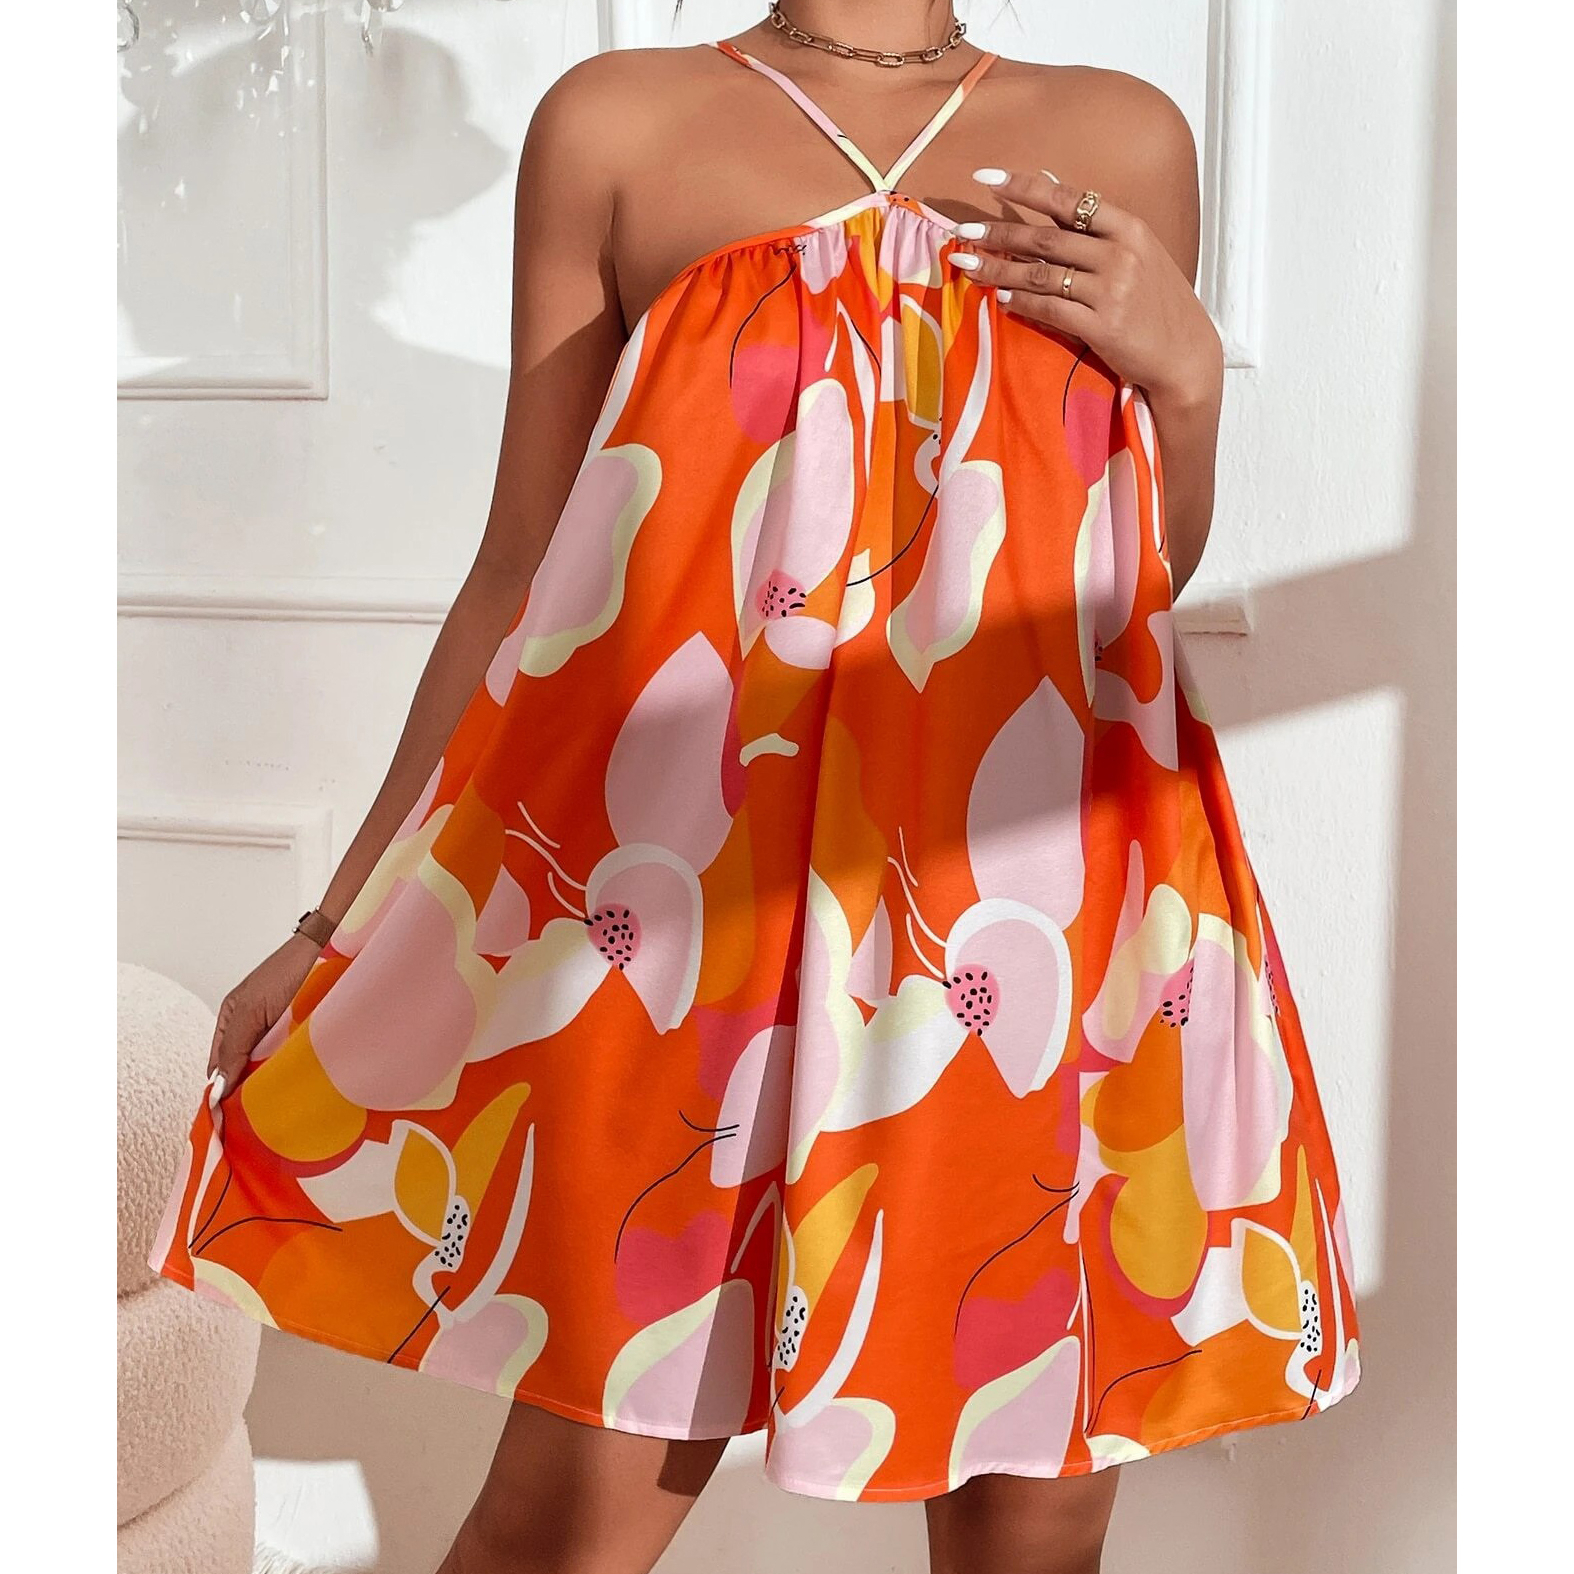 Allover Print Cami Dress - Hot Pink, Large(8/10)